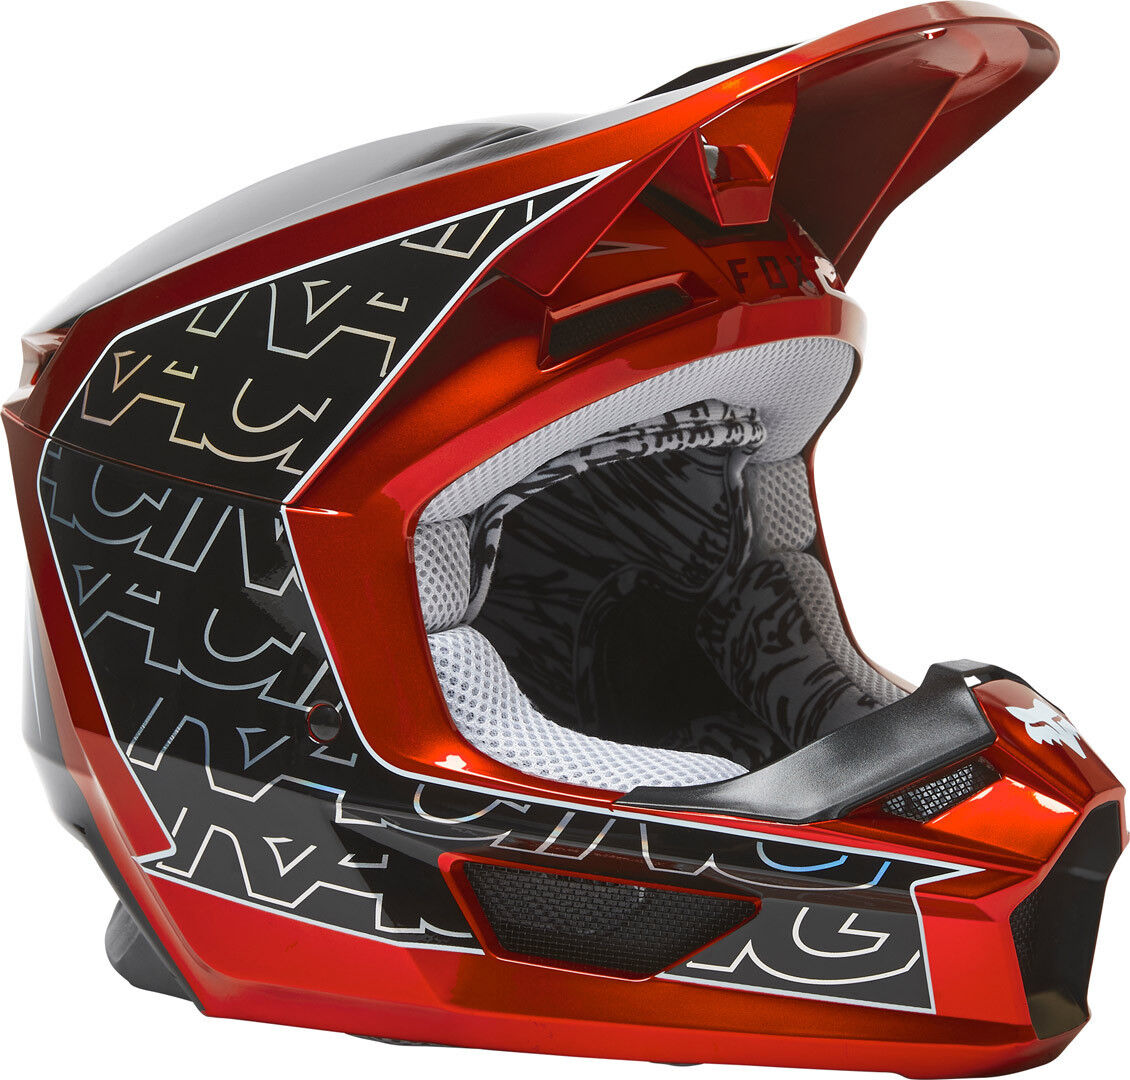 Fox V1 Peril Casco Juvenil de Motocross - Rojo (S)